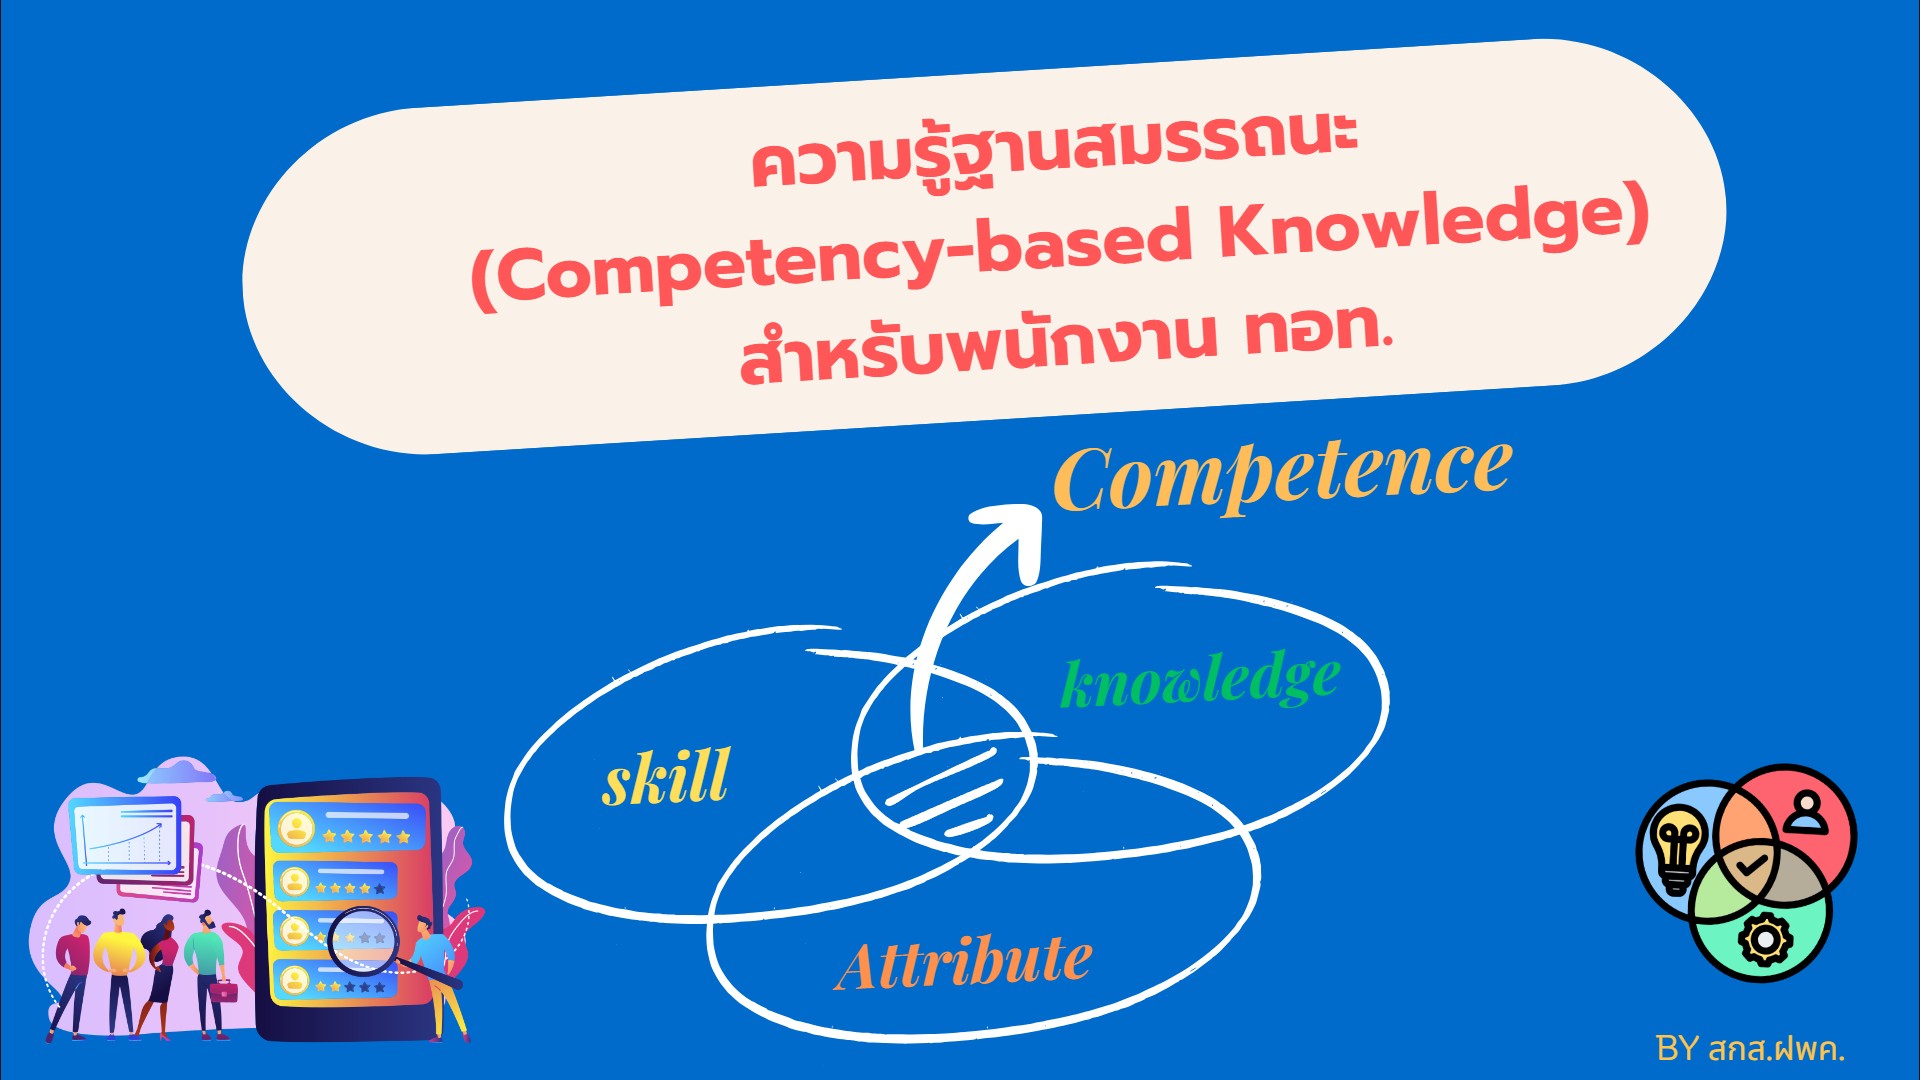 EL ความรู้ฐานสมรรถนะ (Competency-Based Knowledge) ของพนักงาน ทอท. (ทหญ.)